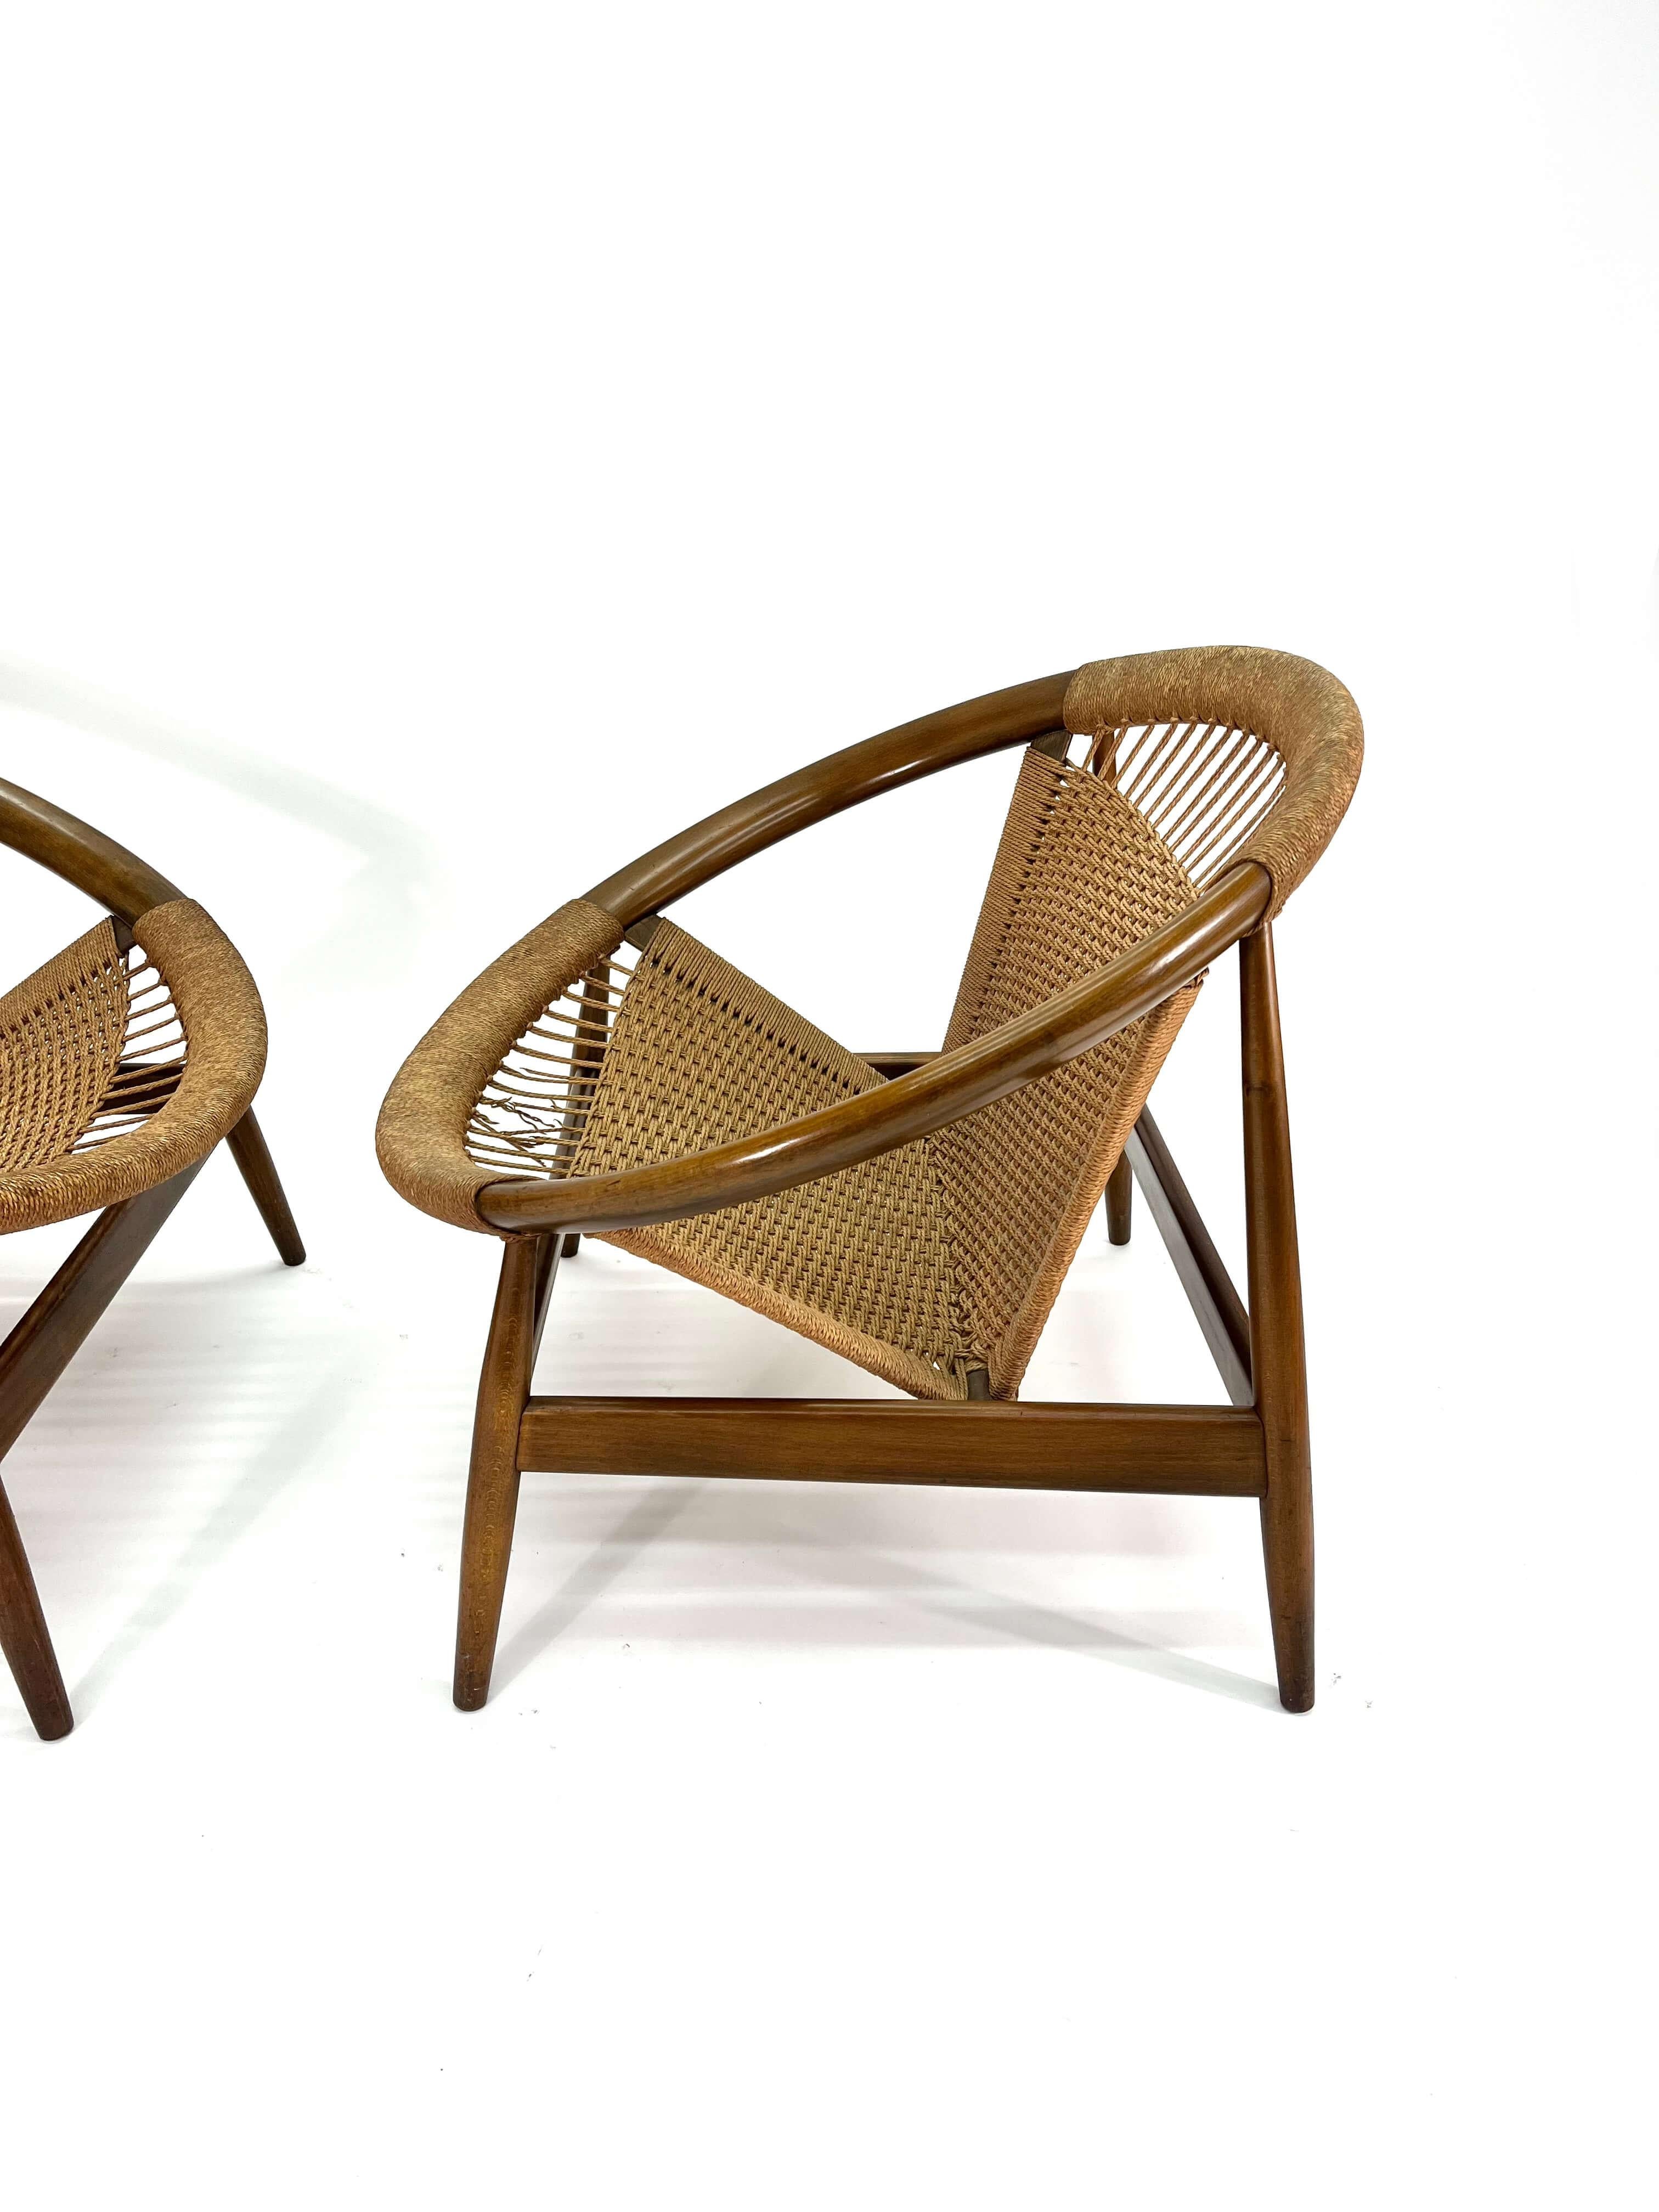 Mid-Century Modern Ringstol Lounge Chair by Illum Wikkelsø For Sale 2